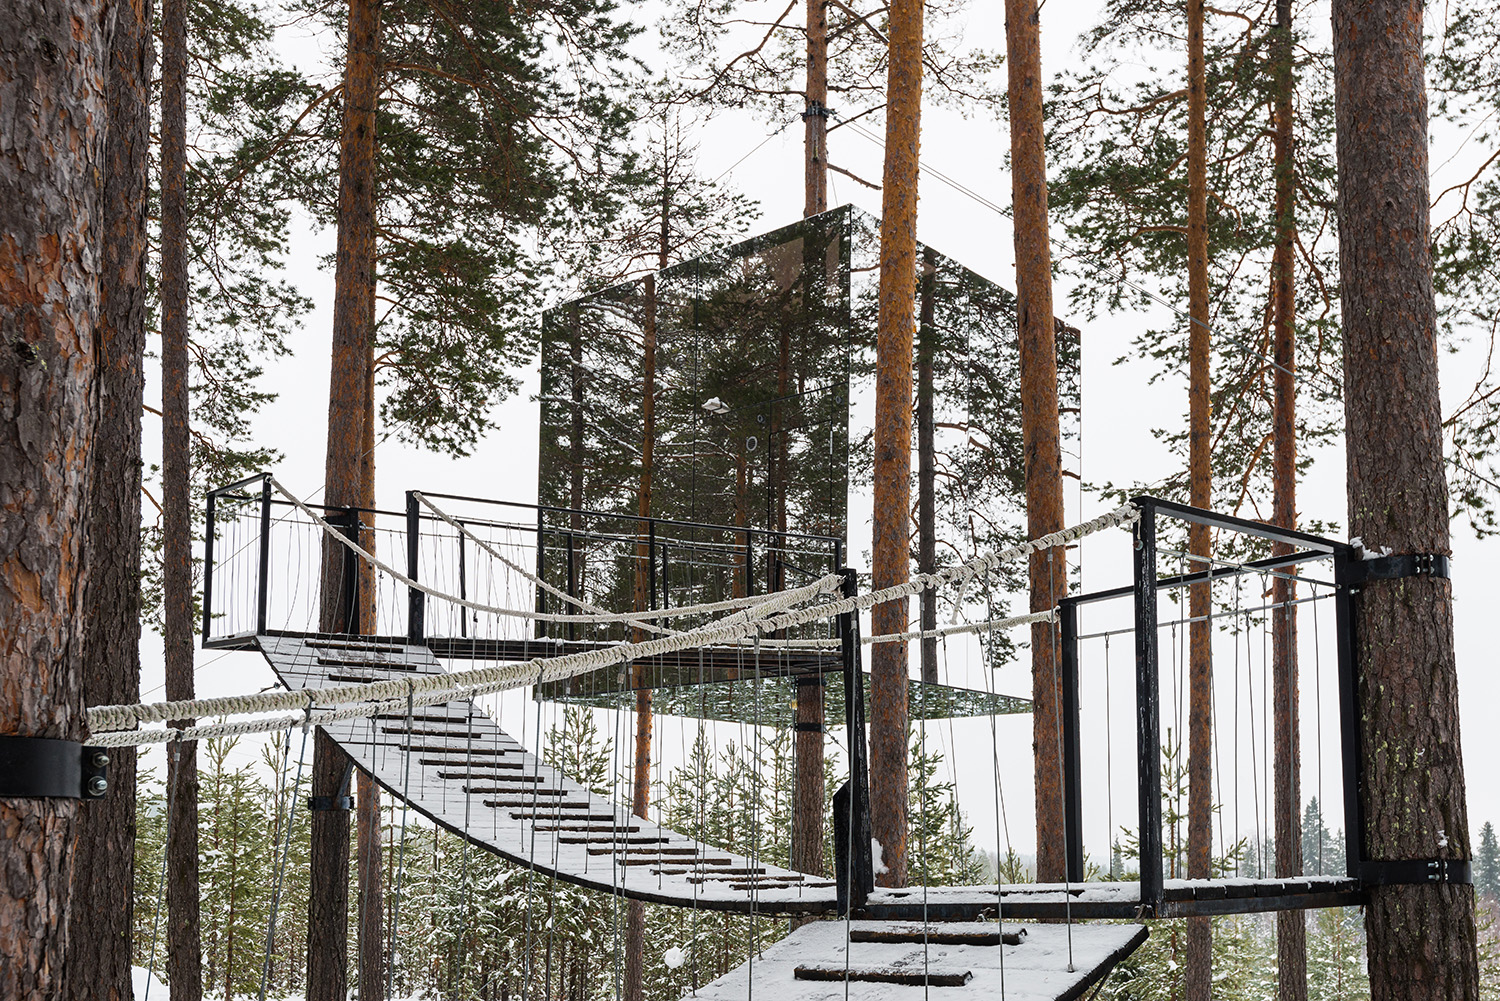 Mirrorcube at Treehotel, Sweden Photo by Kedardome/Shutterstock